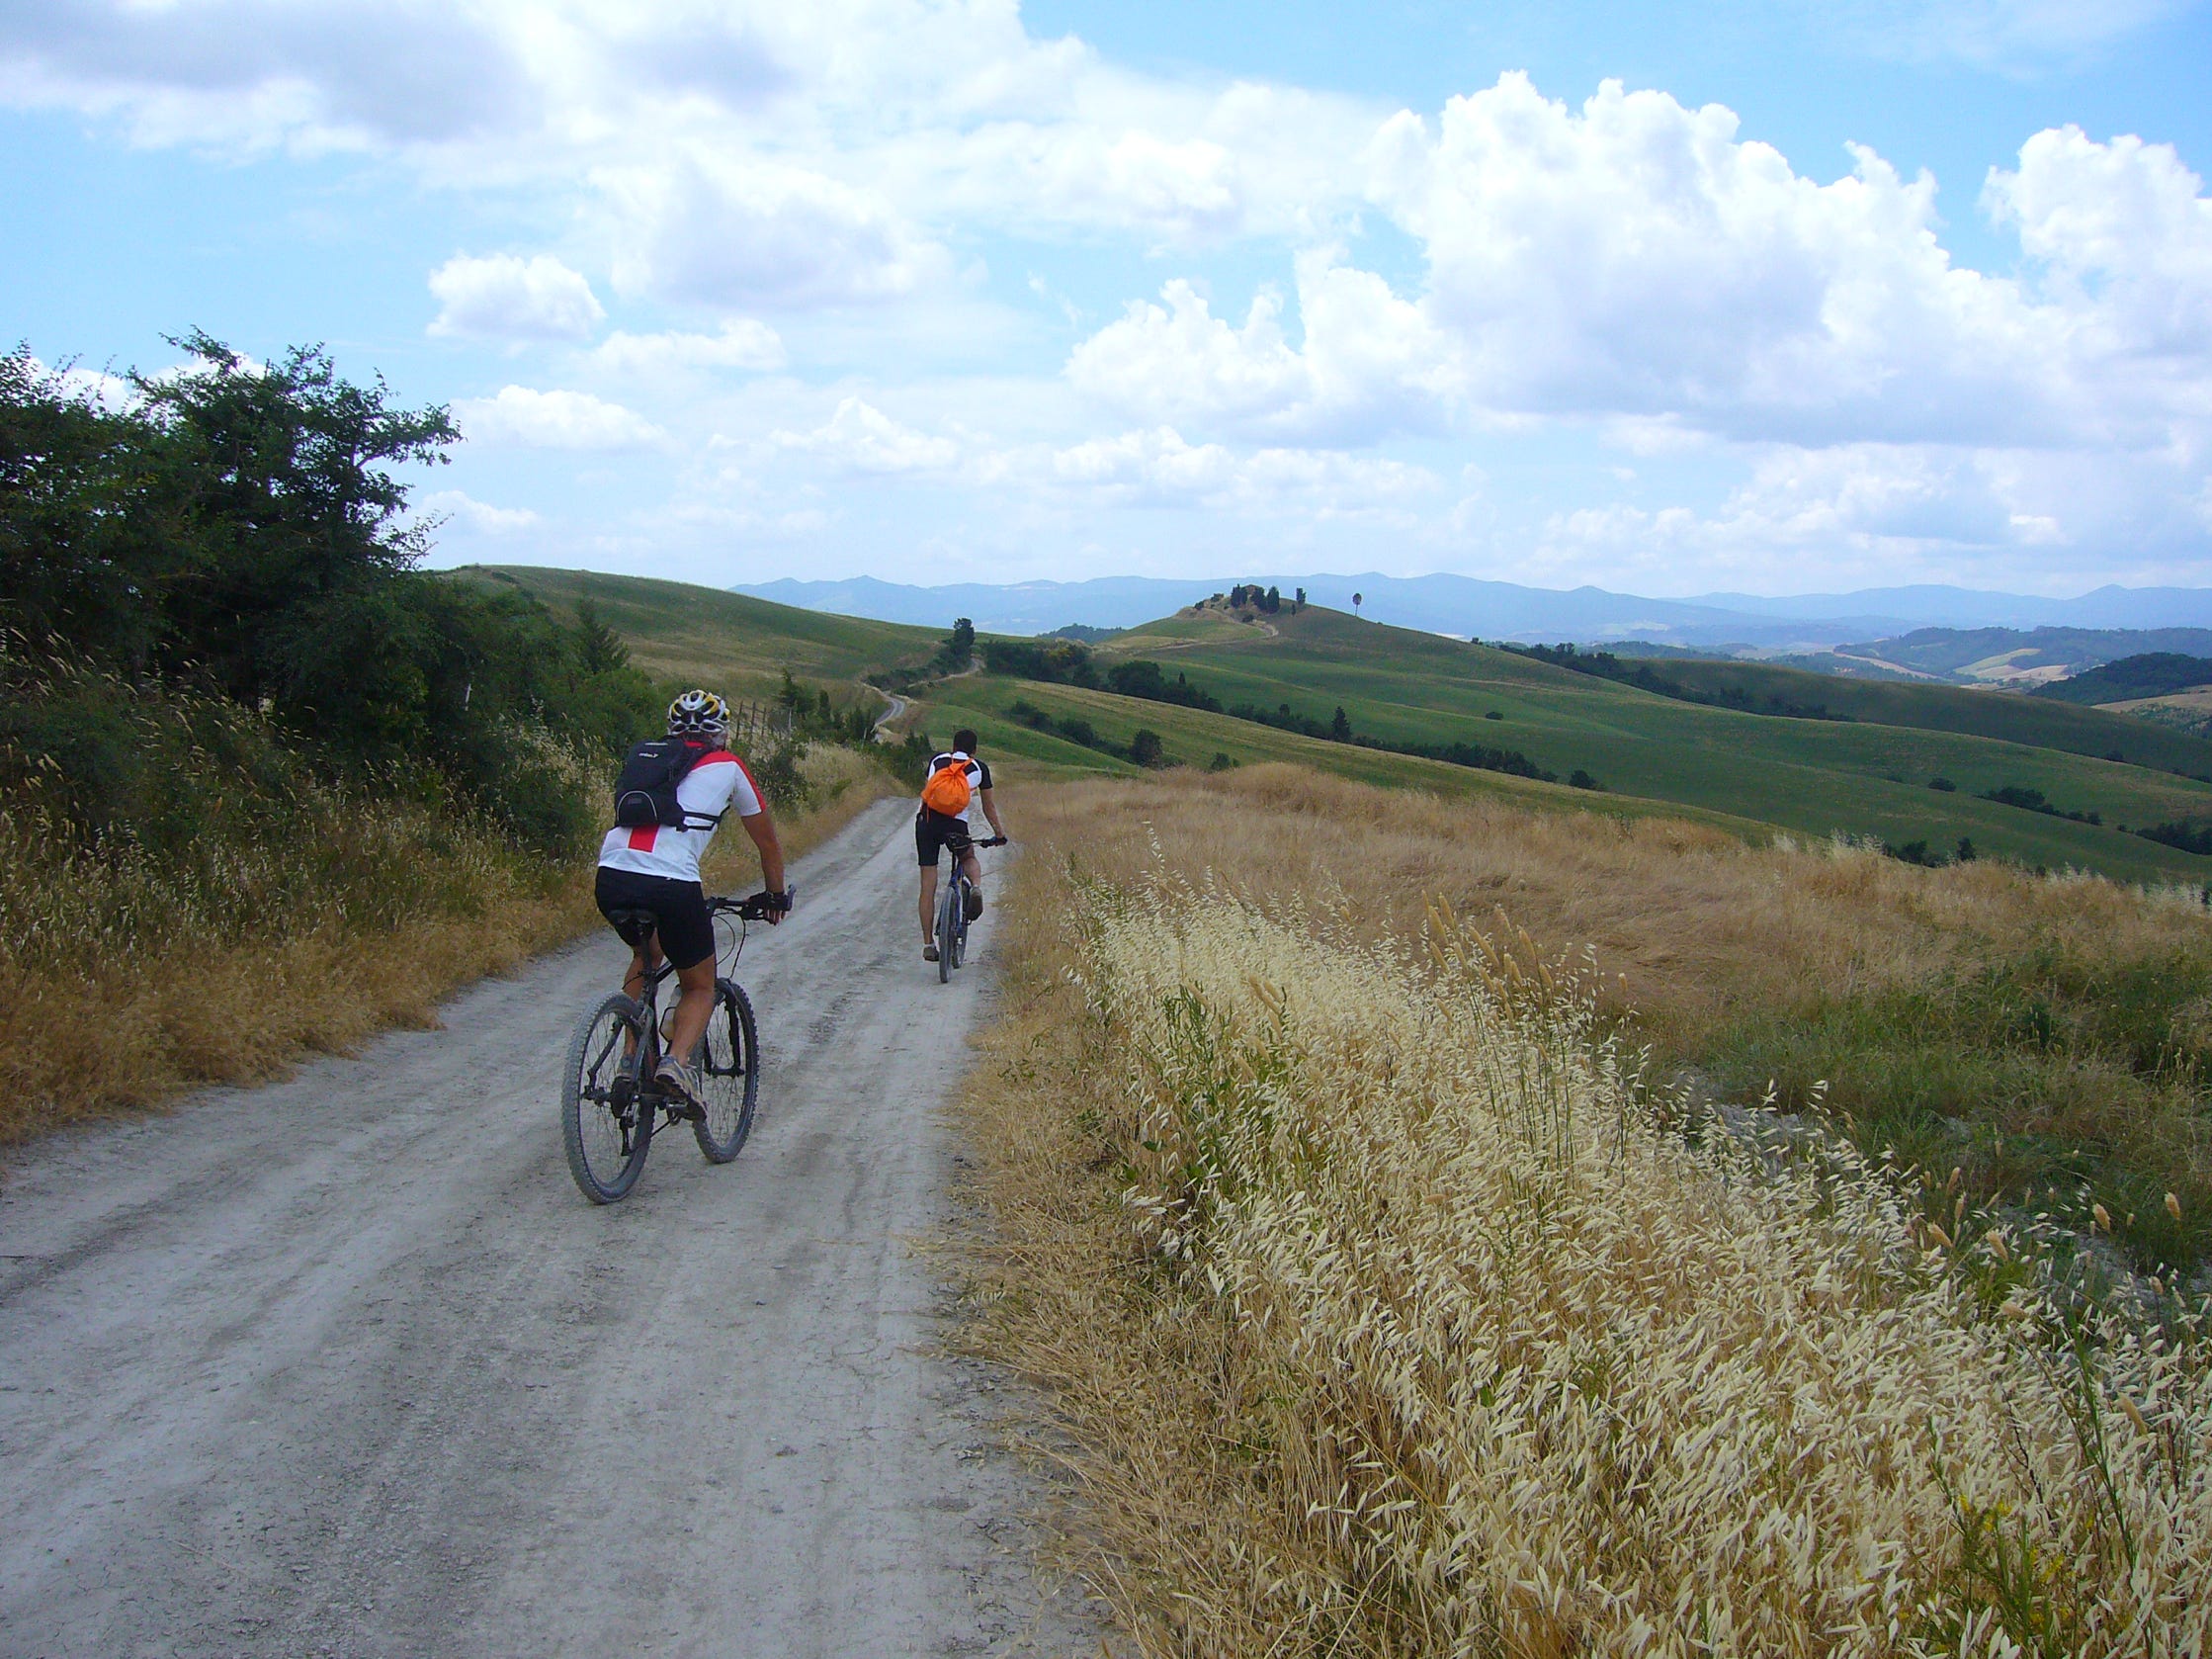 cycling across the scenic white roads of Tuscany during the Crete Senesi bike tour